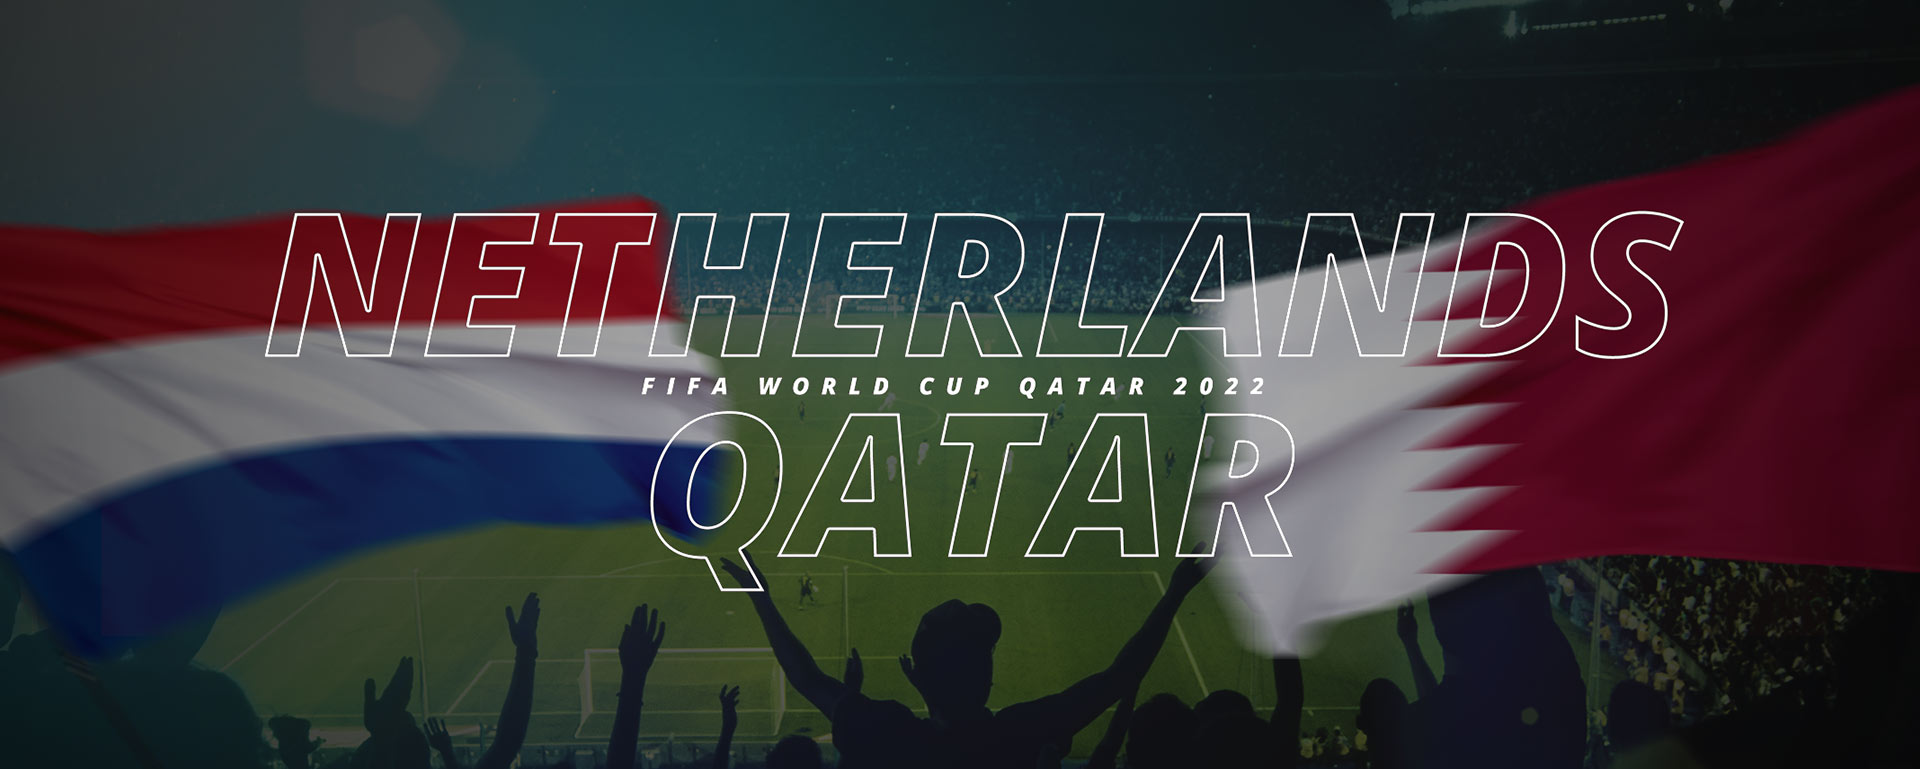 NETHERLANDS VS QATAR  | FIFA WORLD CUP QATAR 2022